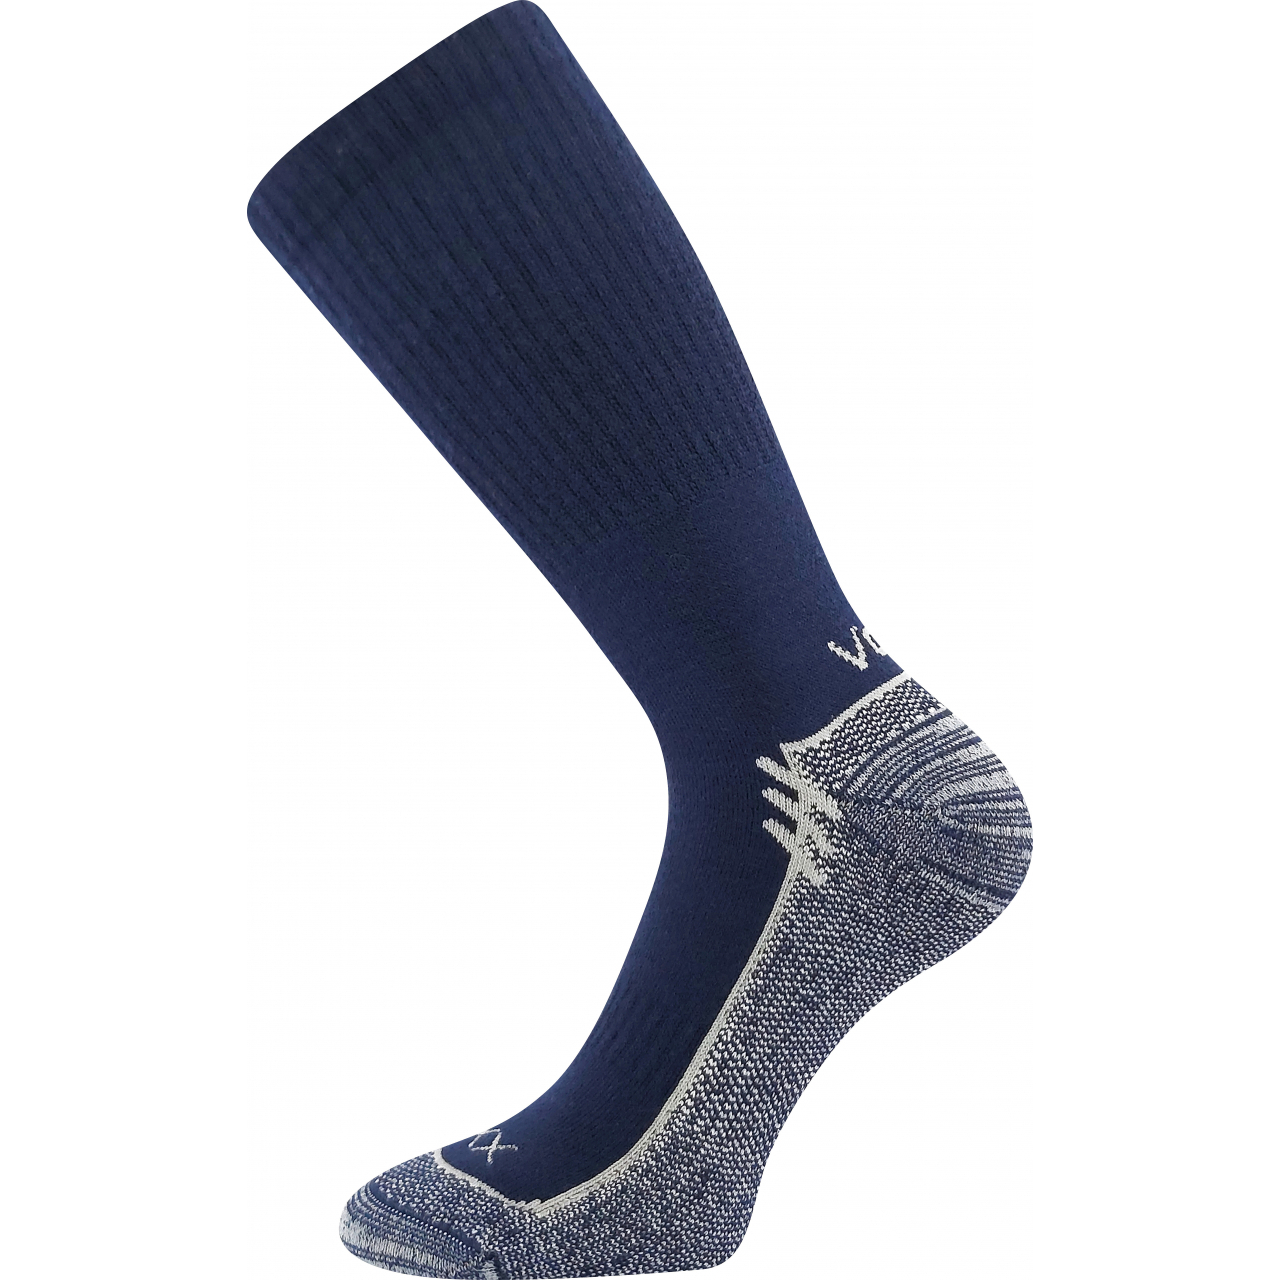 Ponožky trekingové unisex Voxx Phact - tmavě modré, 35-38